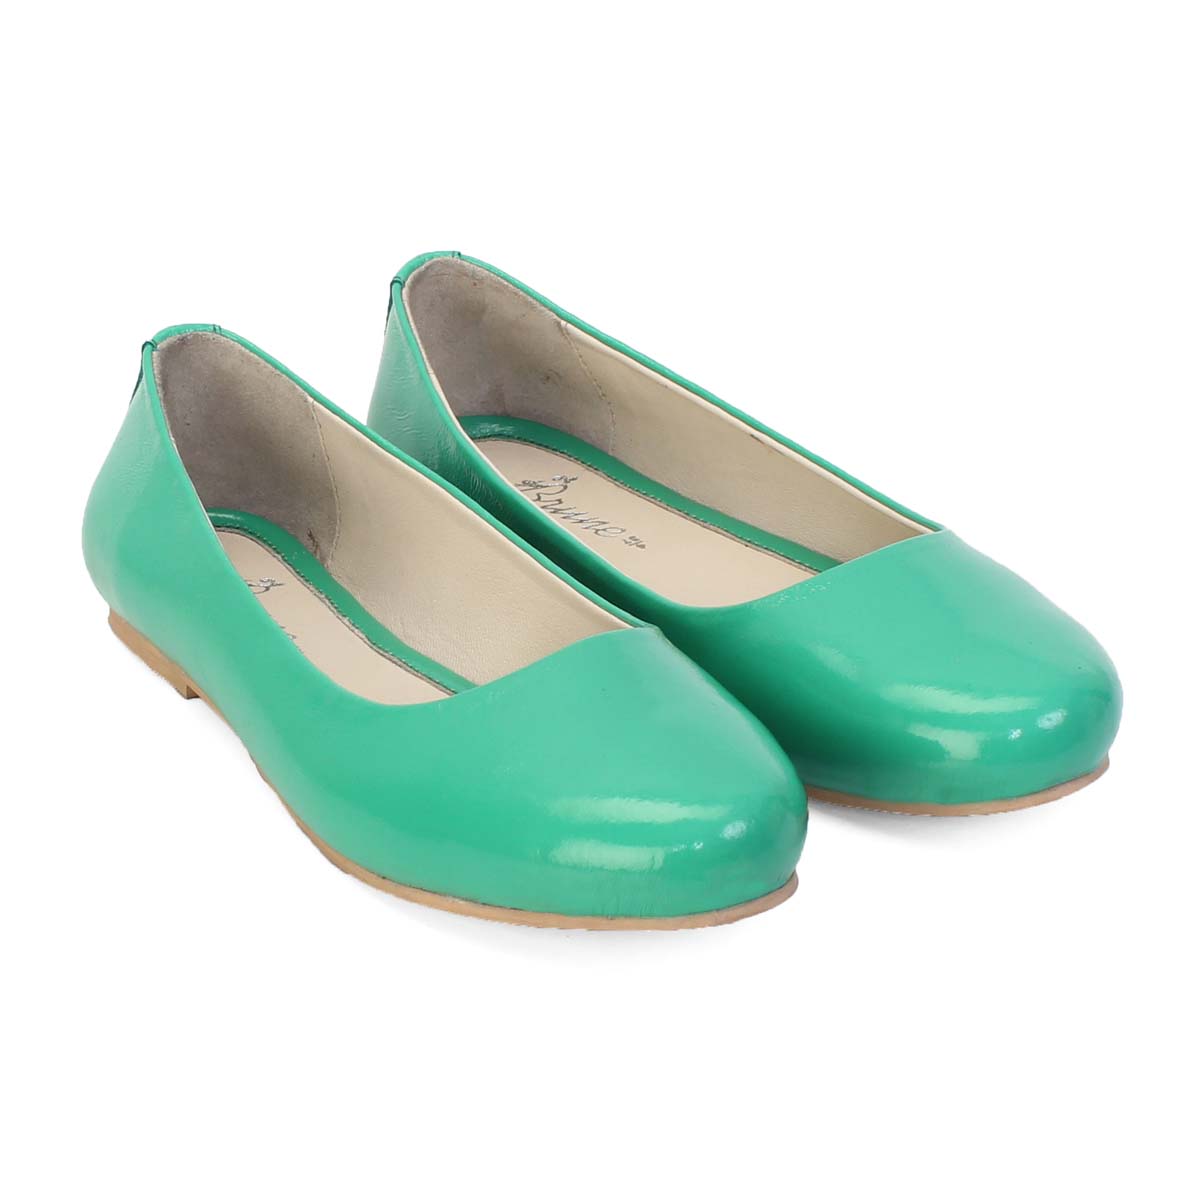 Brune & Bareskin 100% Leather Women Casual Shoes Green Ballerina